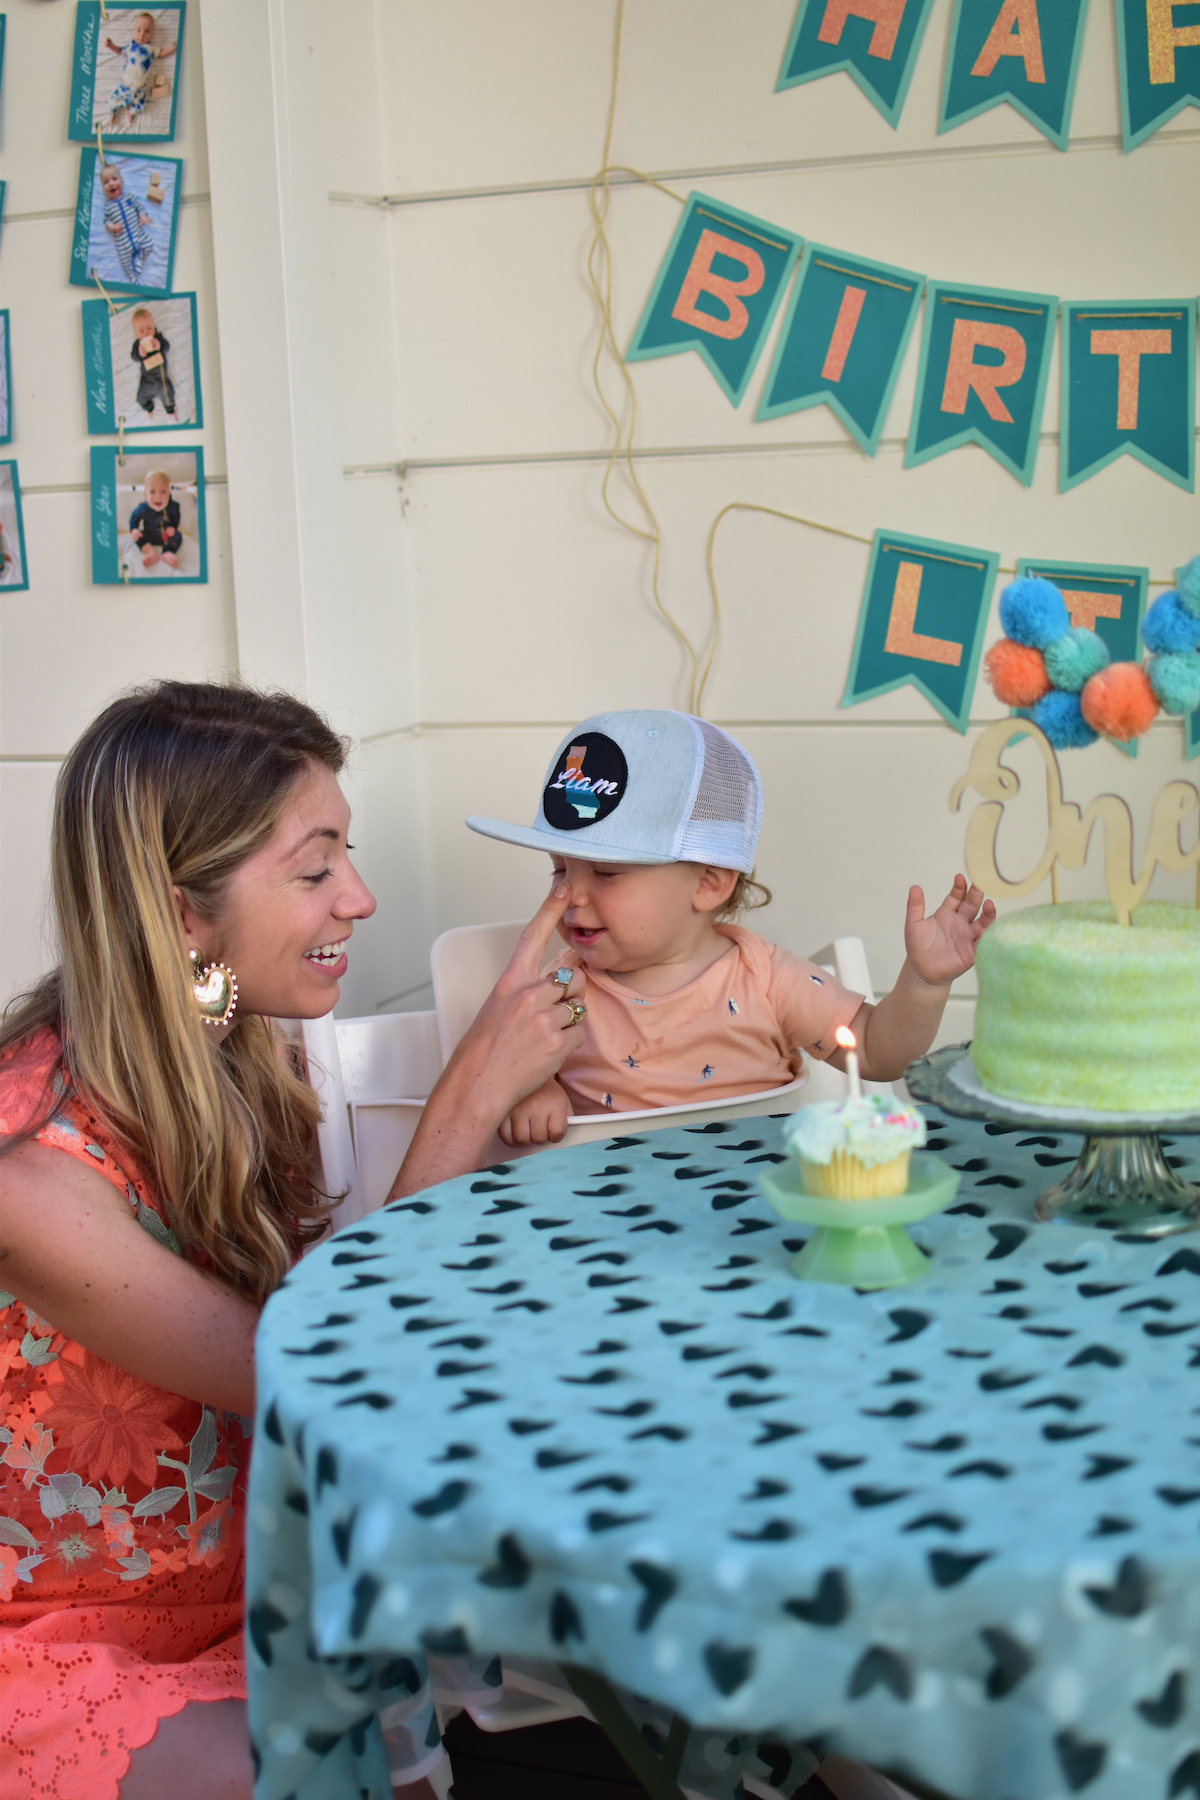 California Surf Theme Birthday Party - Liam's first birthday